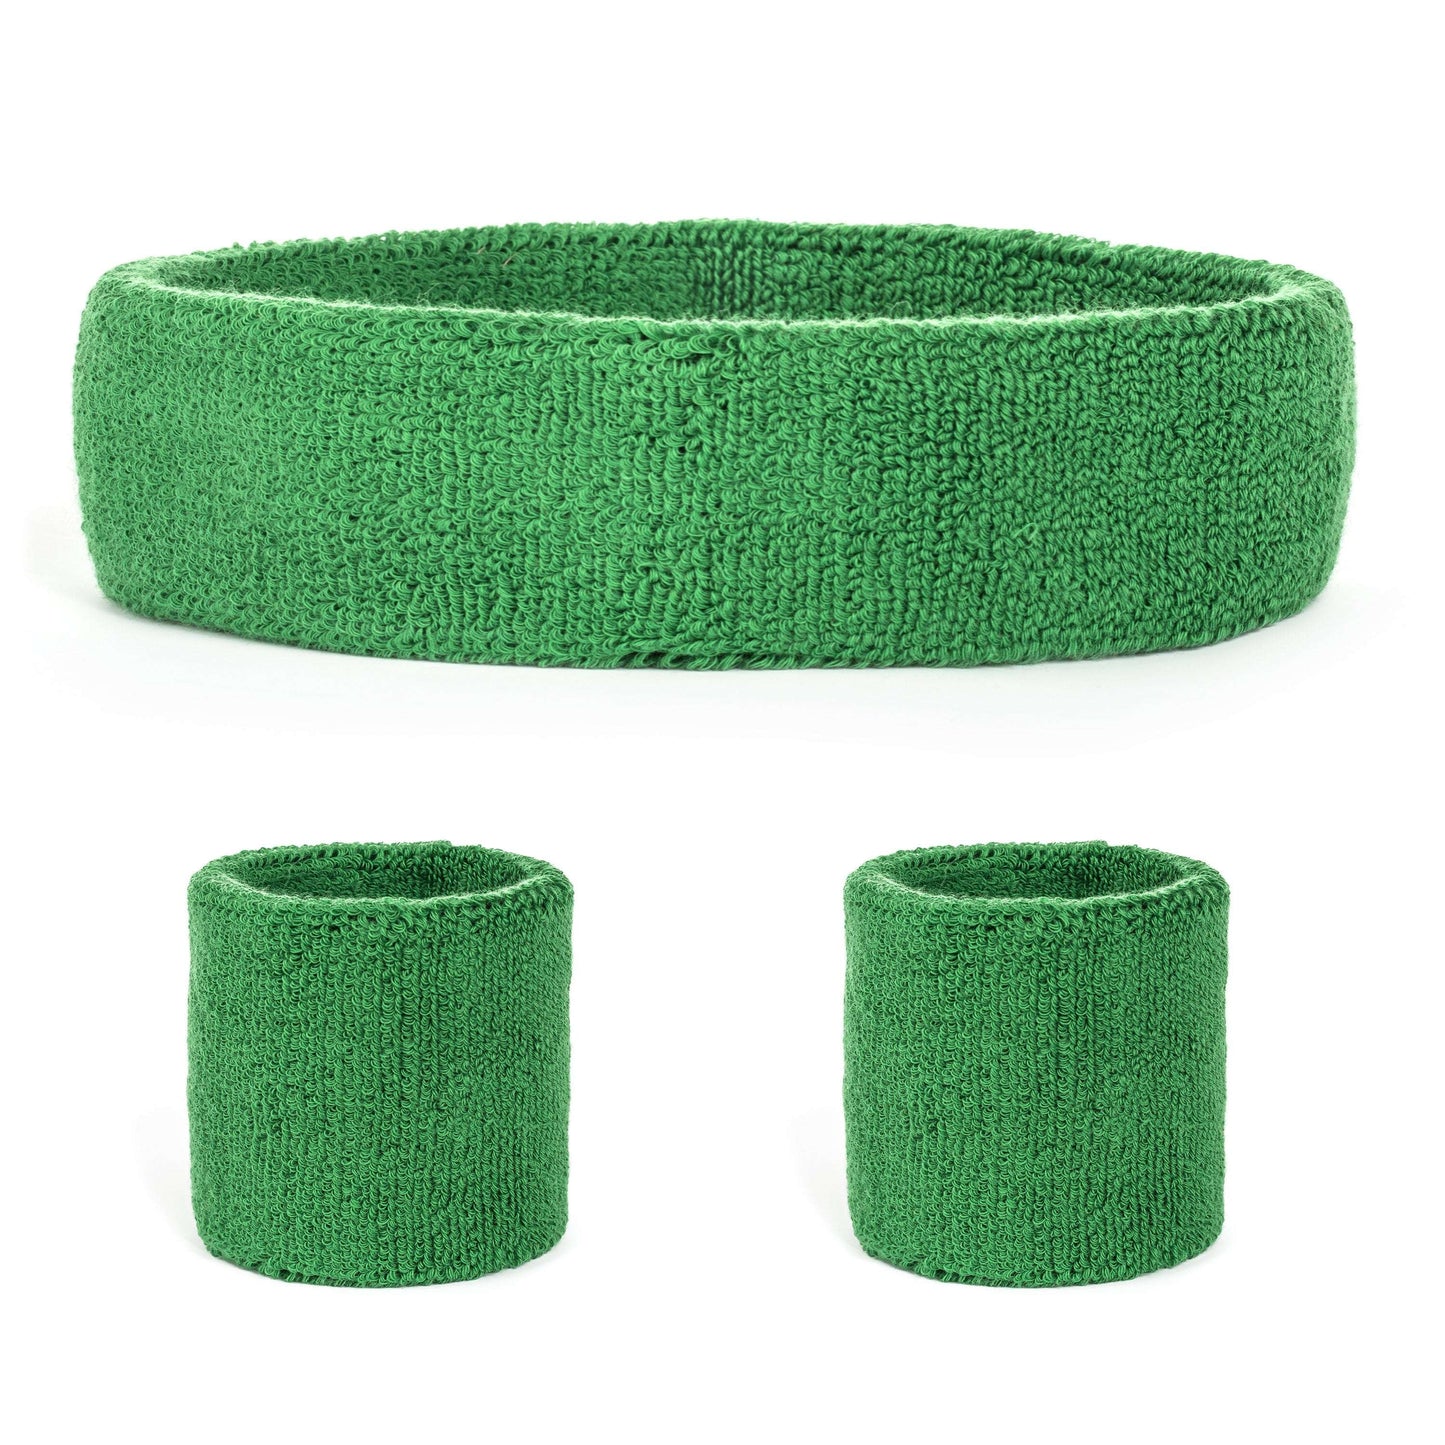 Suddora Sweatband Set (1 Headband & 2 Wristbands) - Green